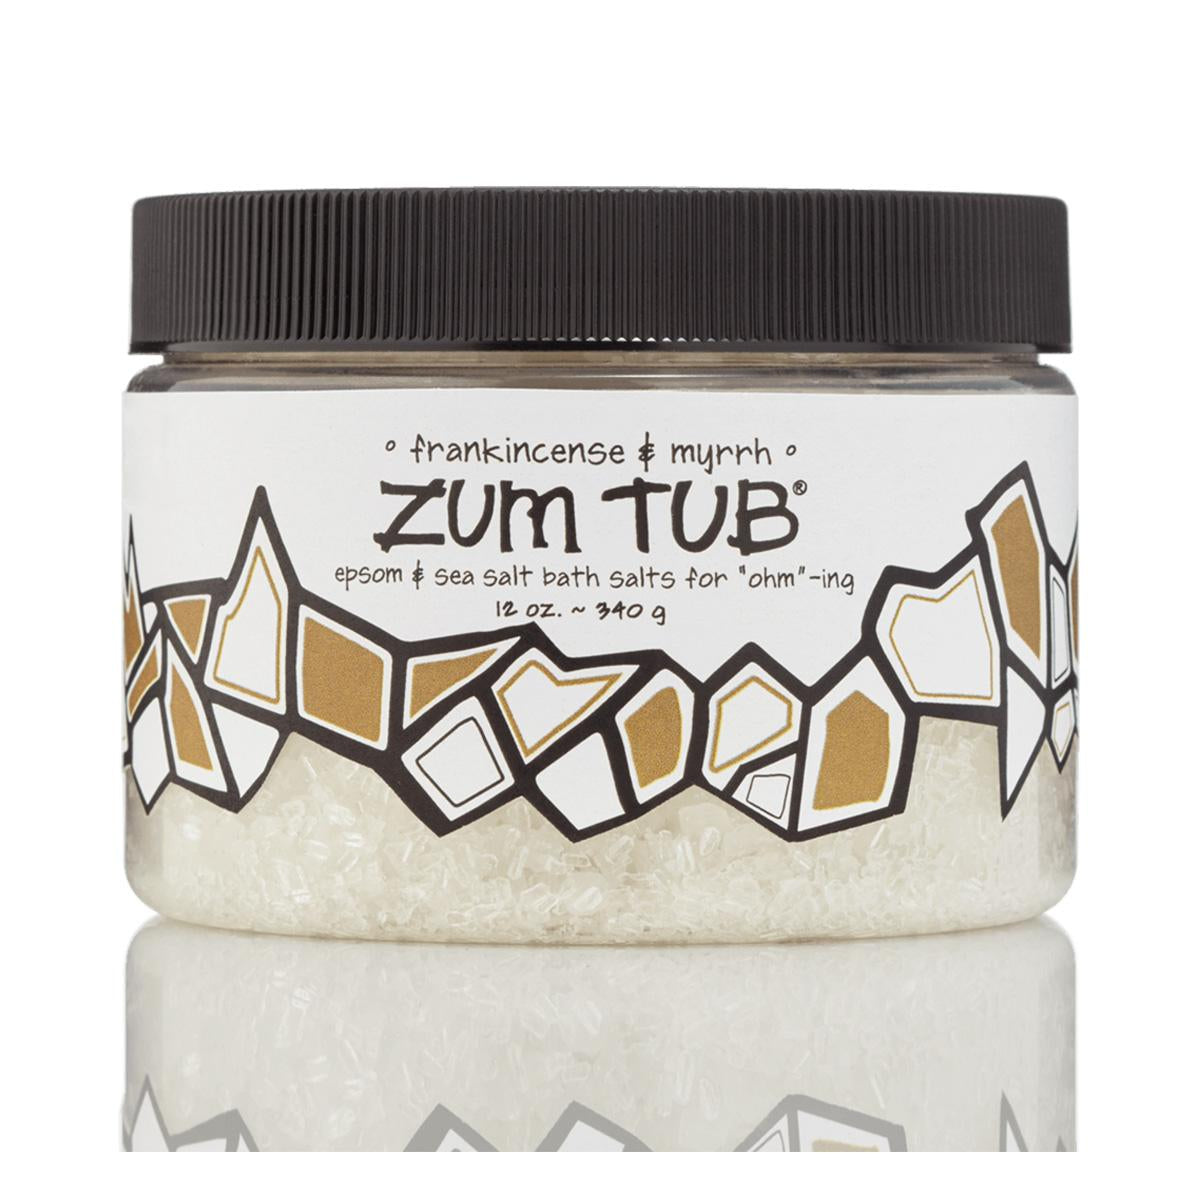 Primary image of Zum Tub Frankincense and Myrrh Shea Butter Bath Salts